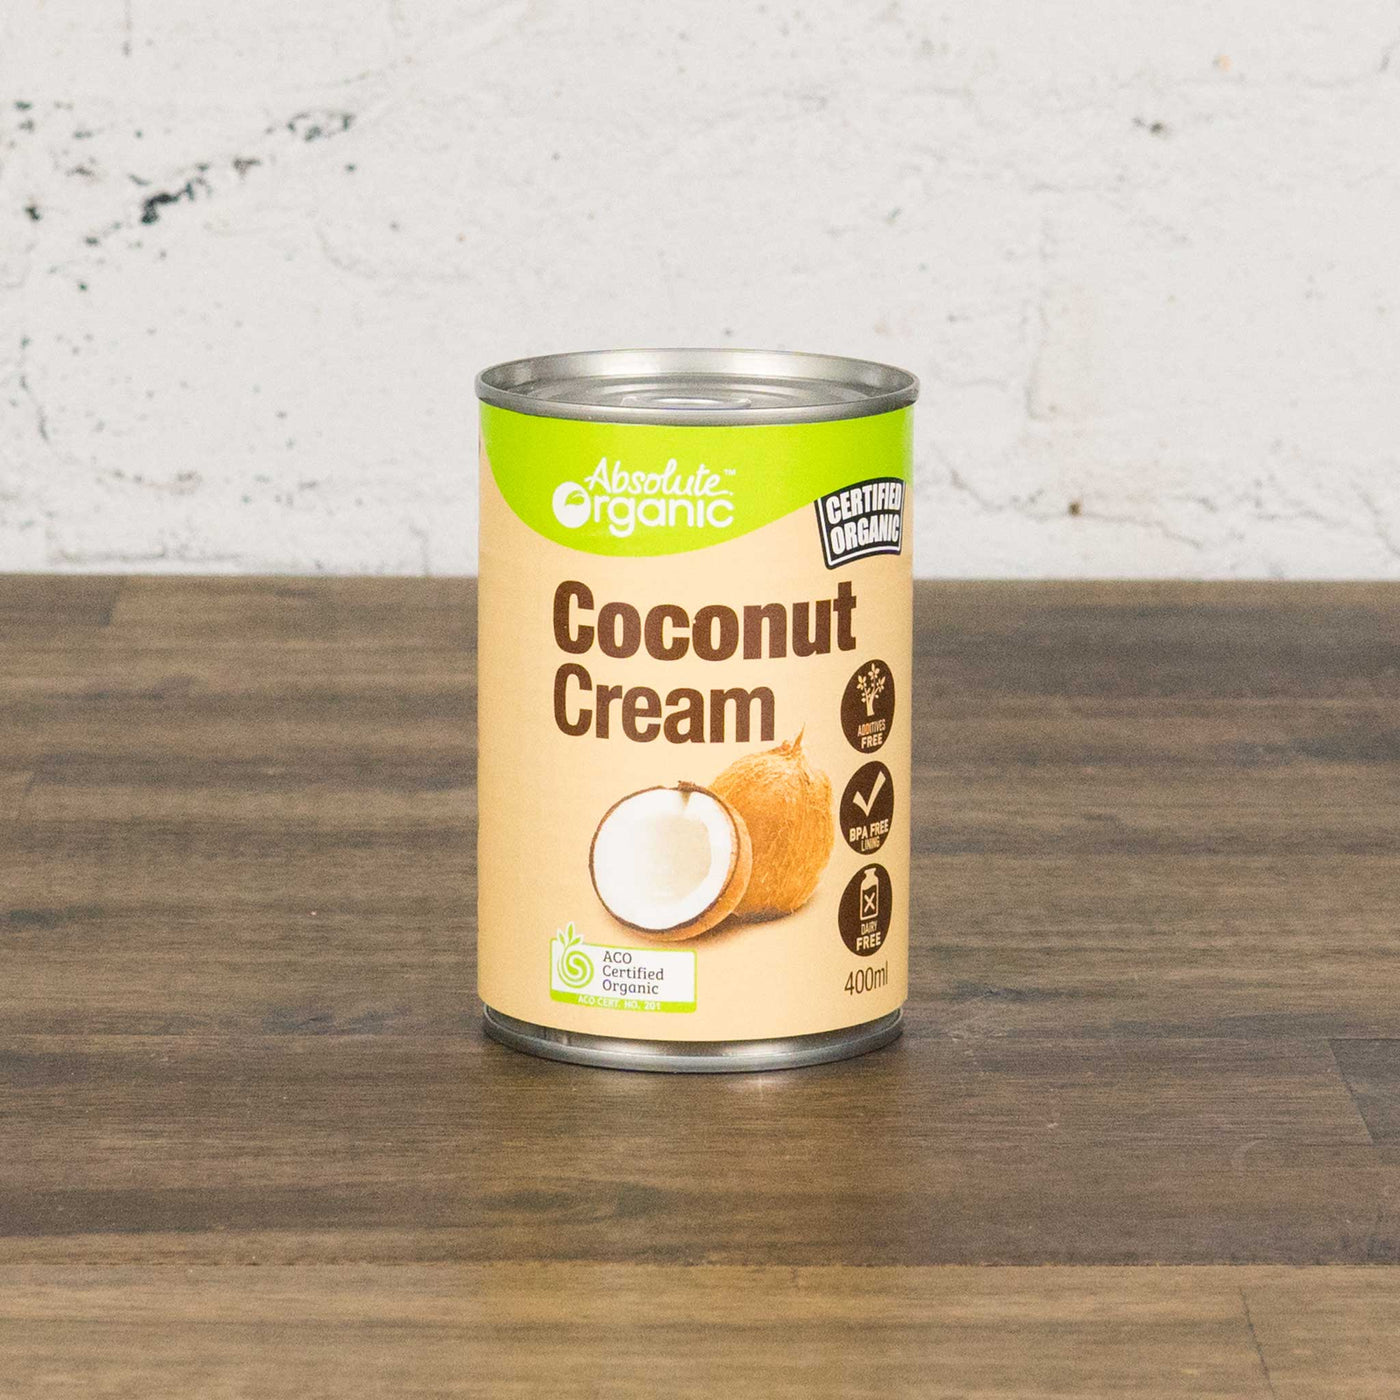 Absolute Organics Coconut Cream Canned